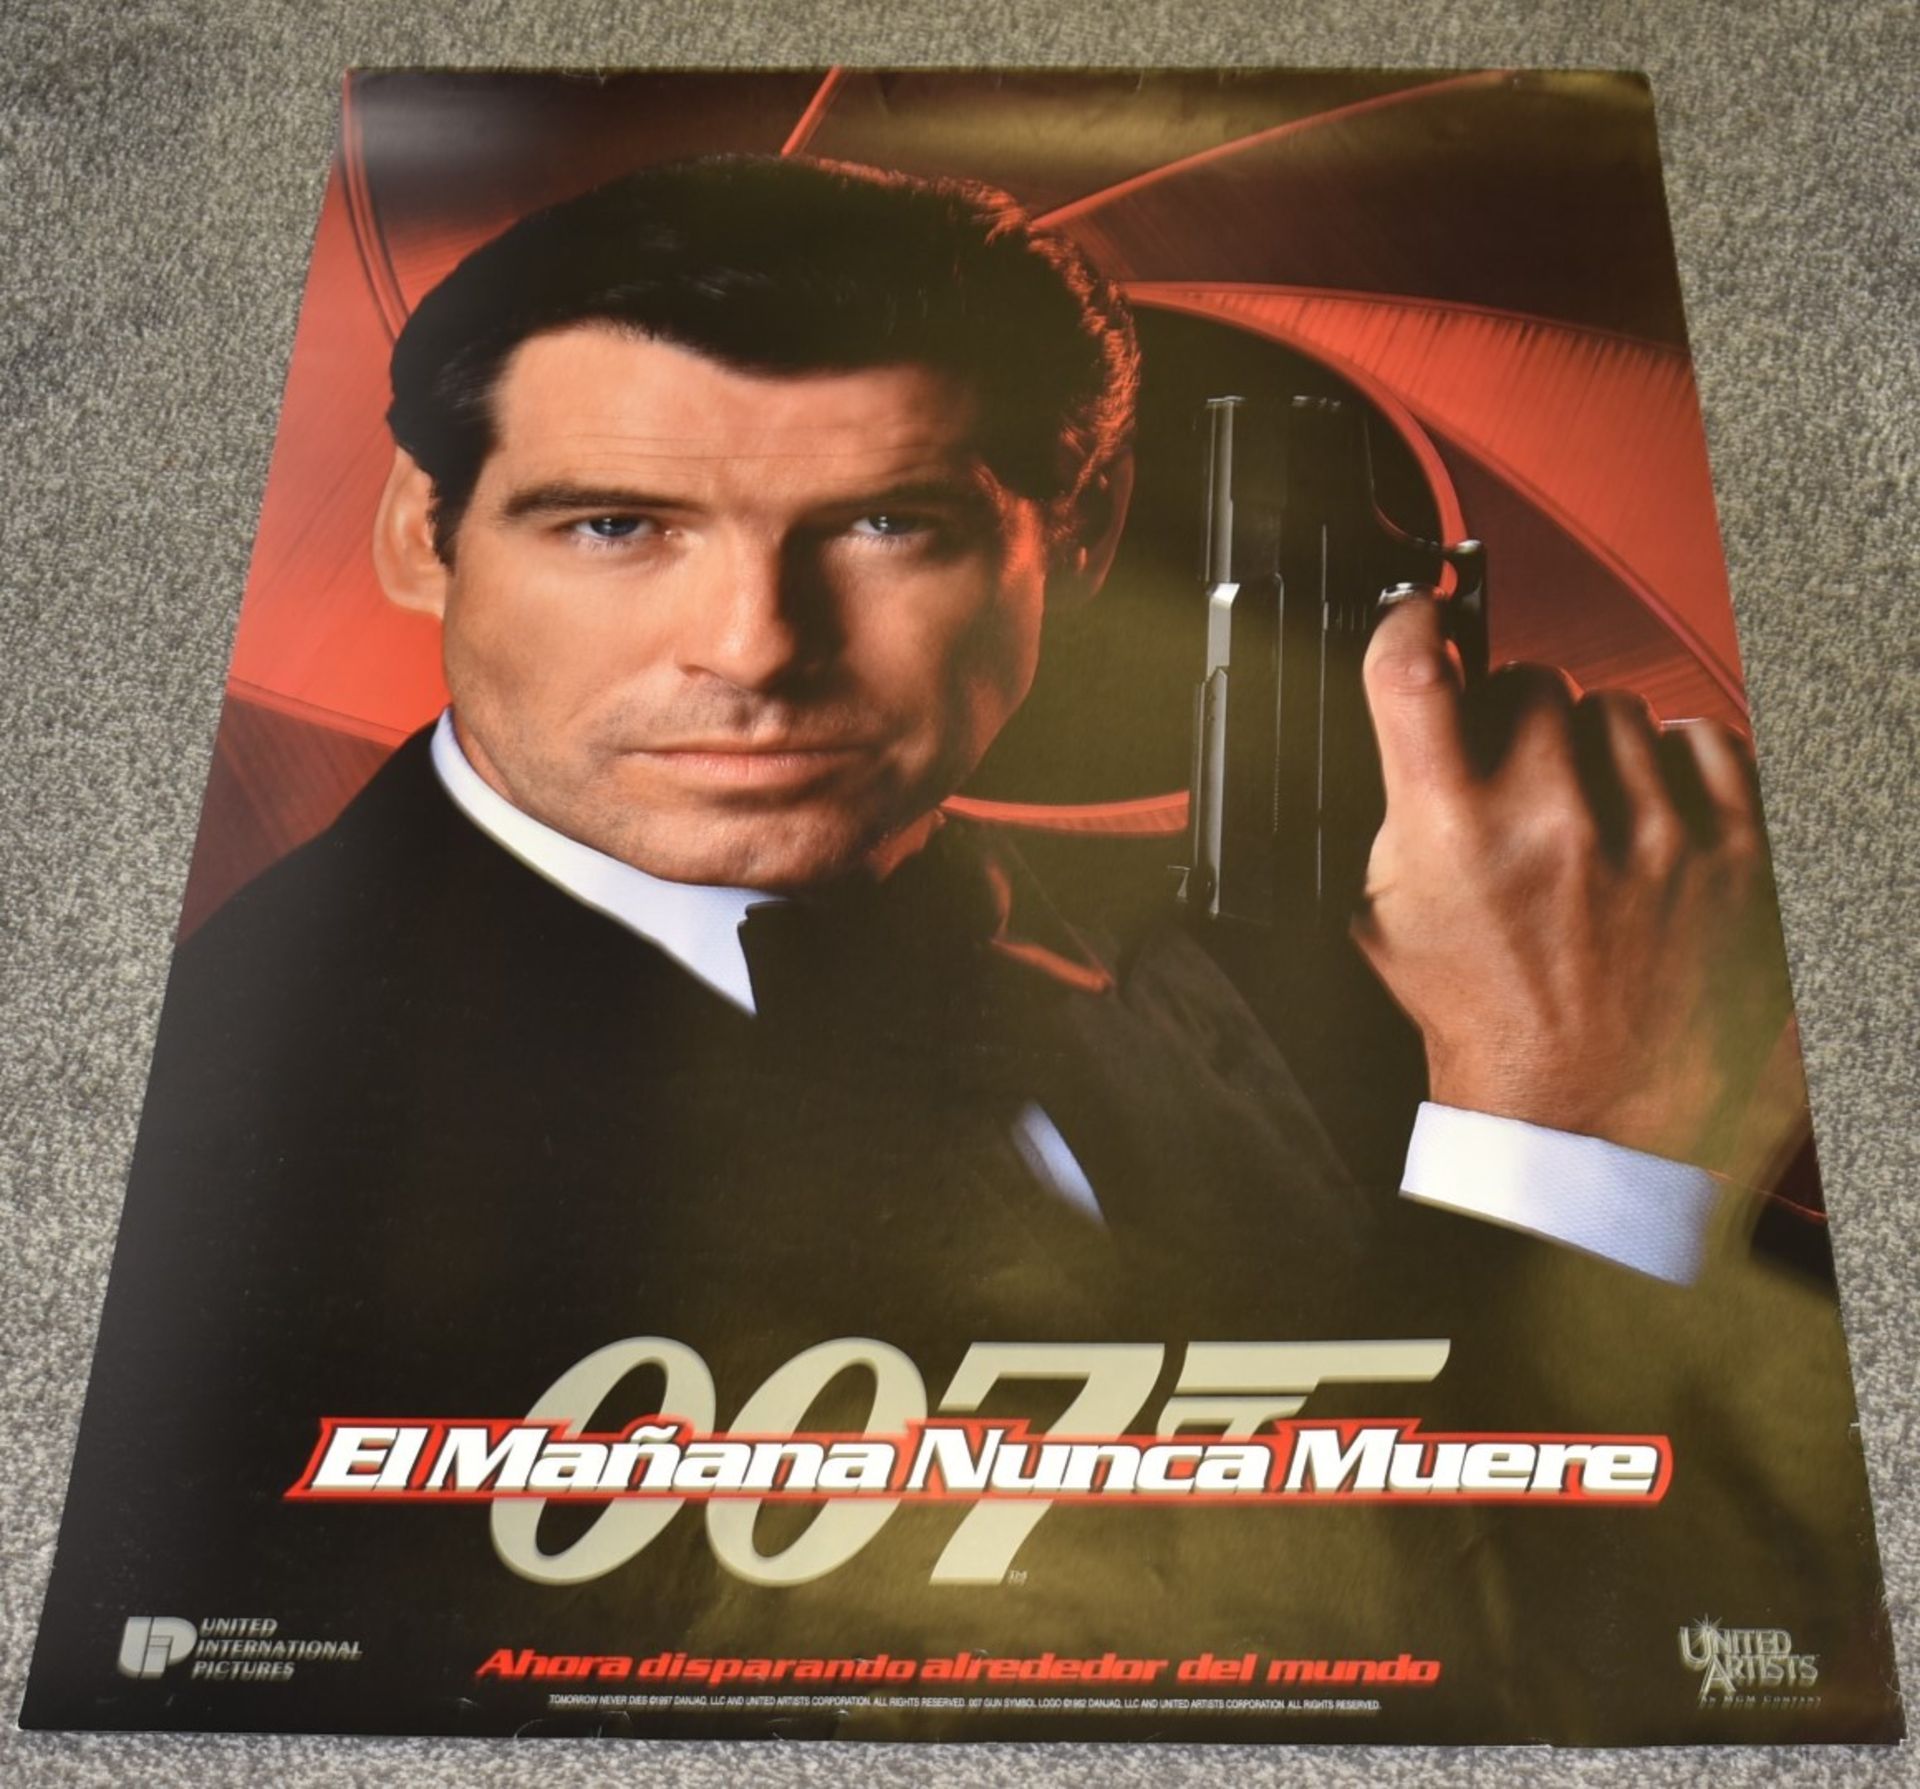 1 x Spanish Double Side Movie Poster - JAMES BOND 007 TOMORROW NEVER DIES - Starring Pierce Brosnan,